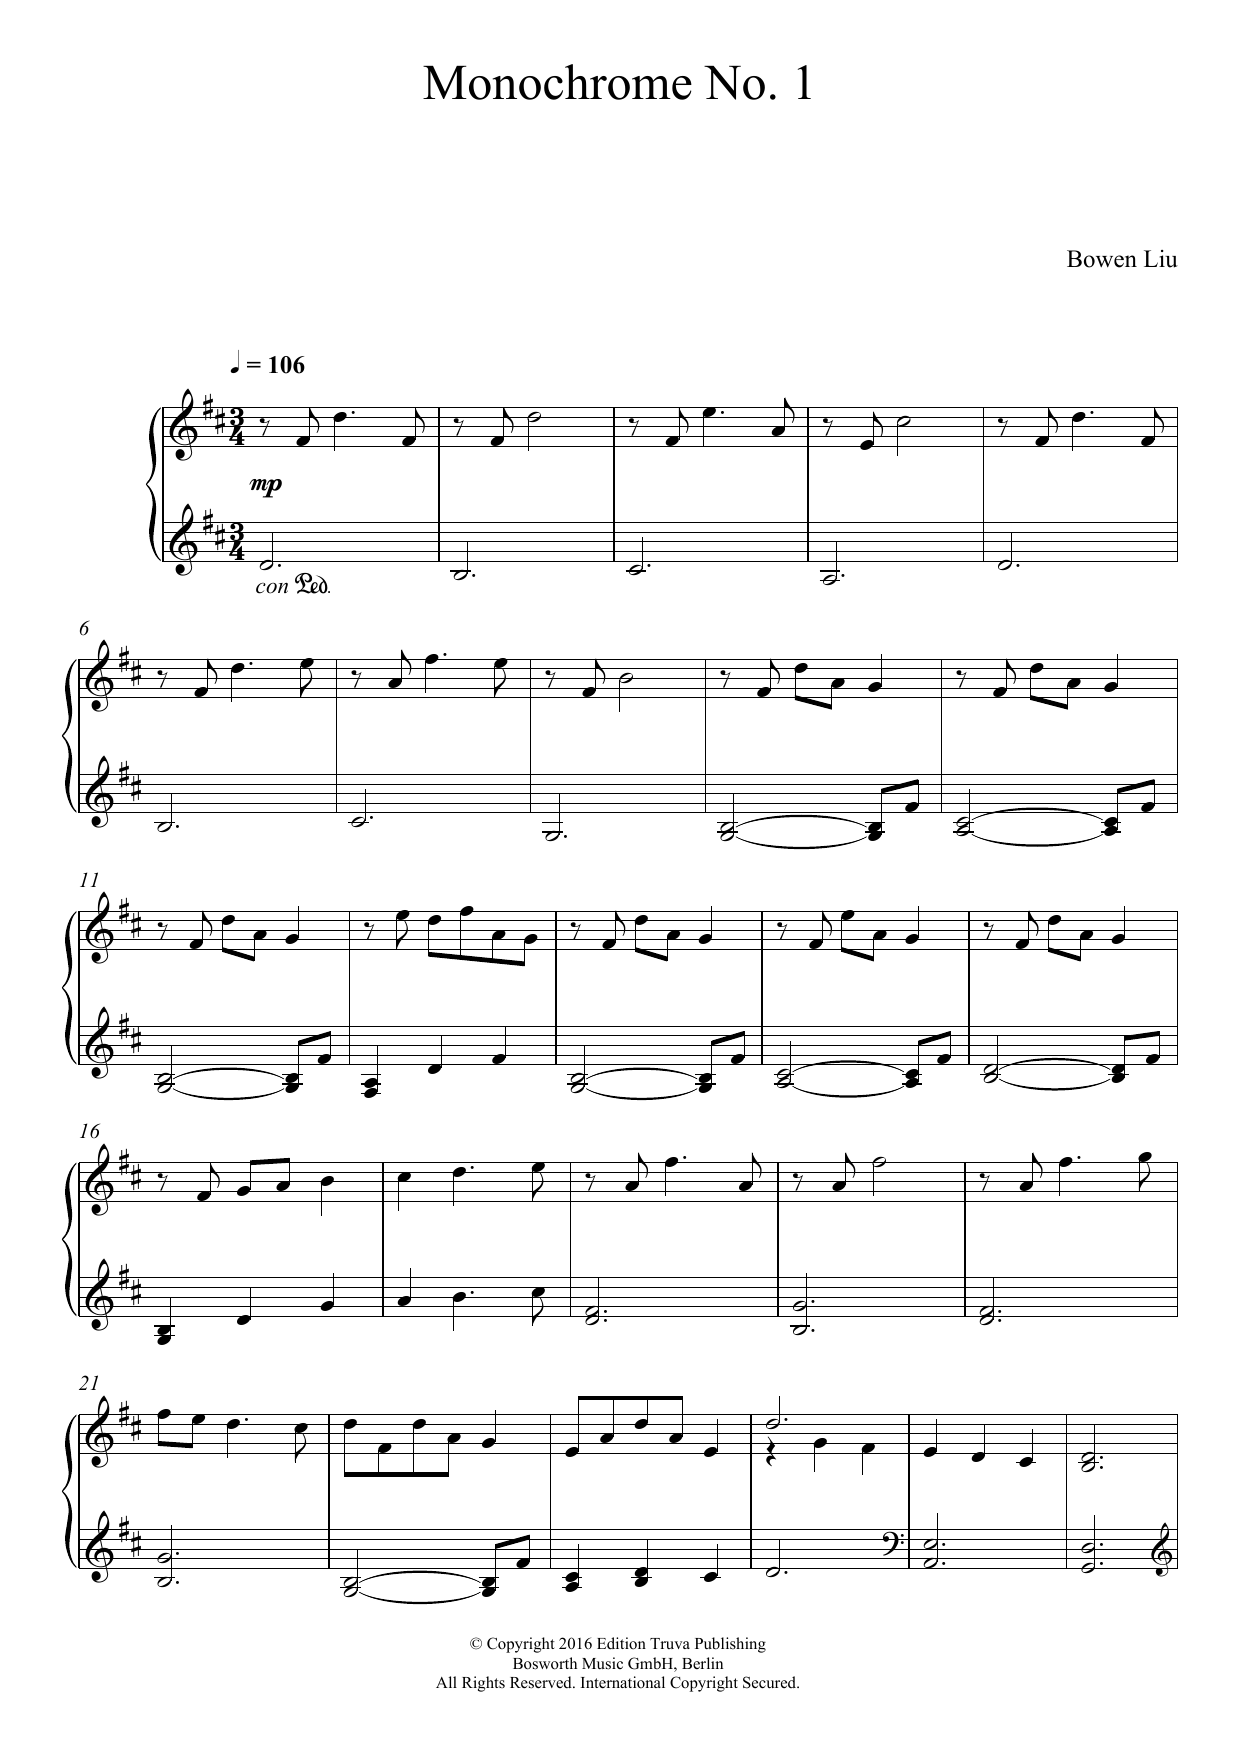 Bowen Liu Monochrome No. 1 Sheet Music Notes & Chords for Piano - Download or Print PDF